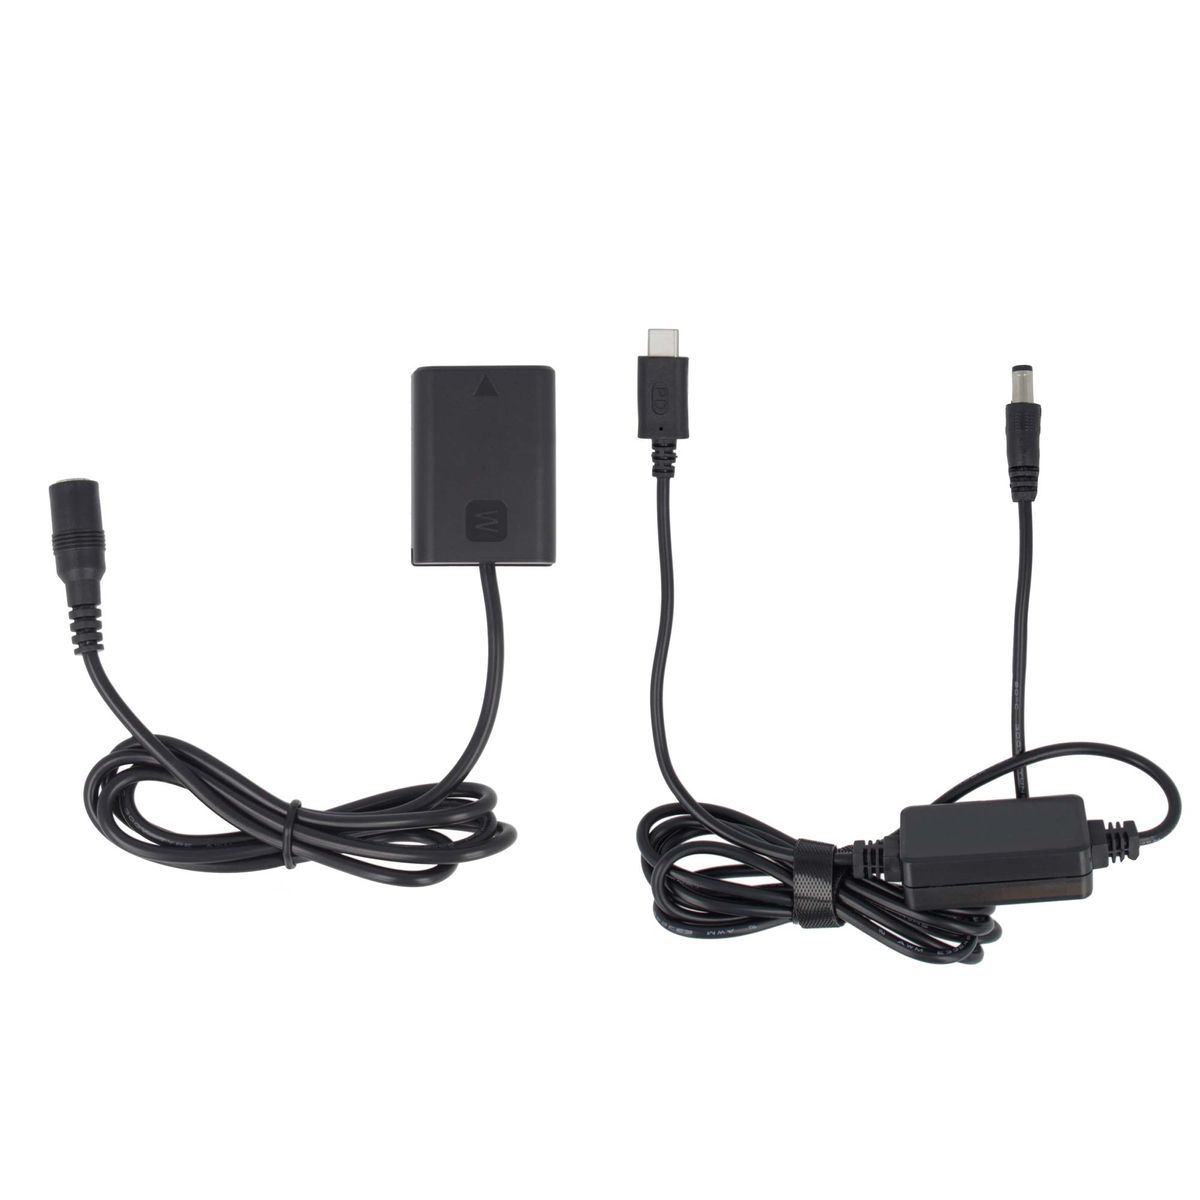 AKKU-KING USB-C Adapter + Kuppler Sony, Angabe keine mit kompatibel Sony AC-PW20 Ladegerät